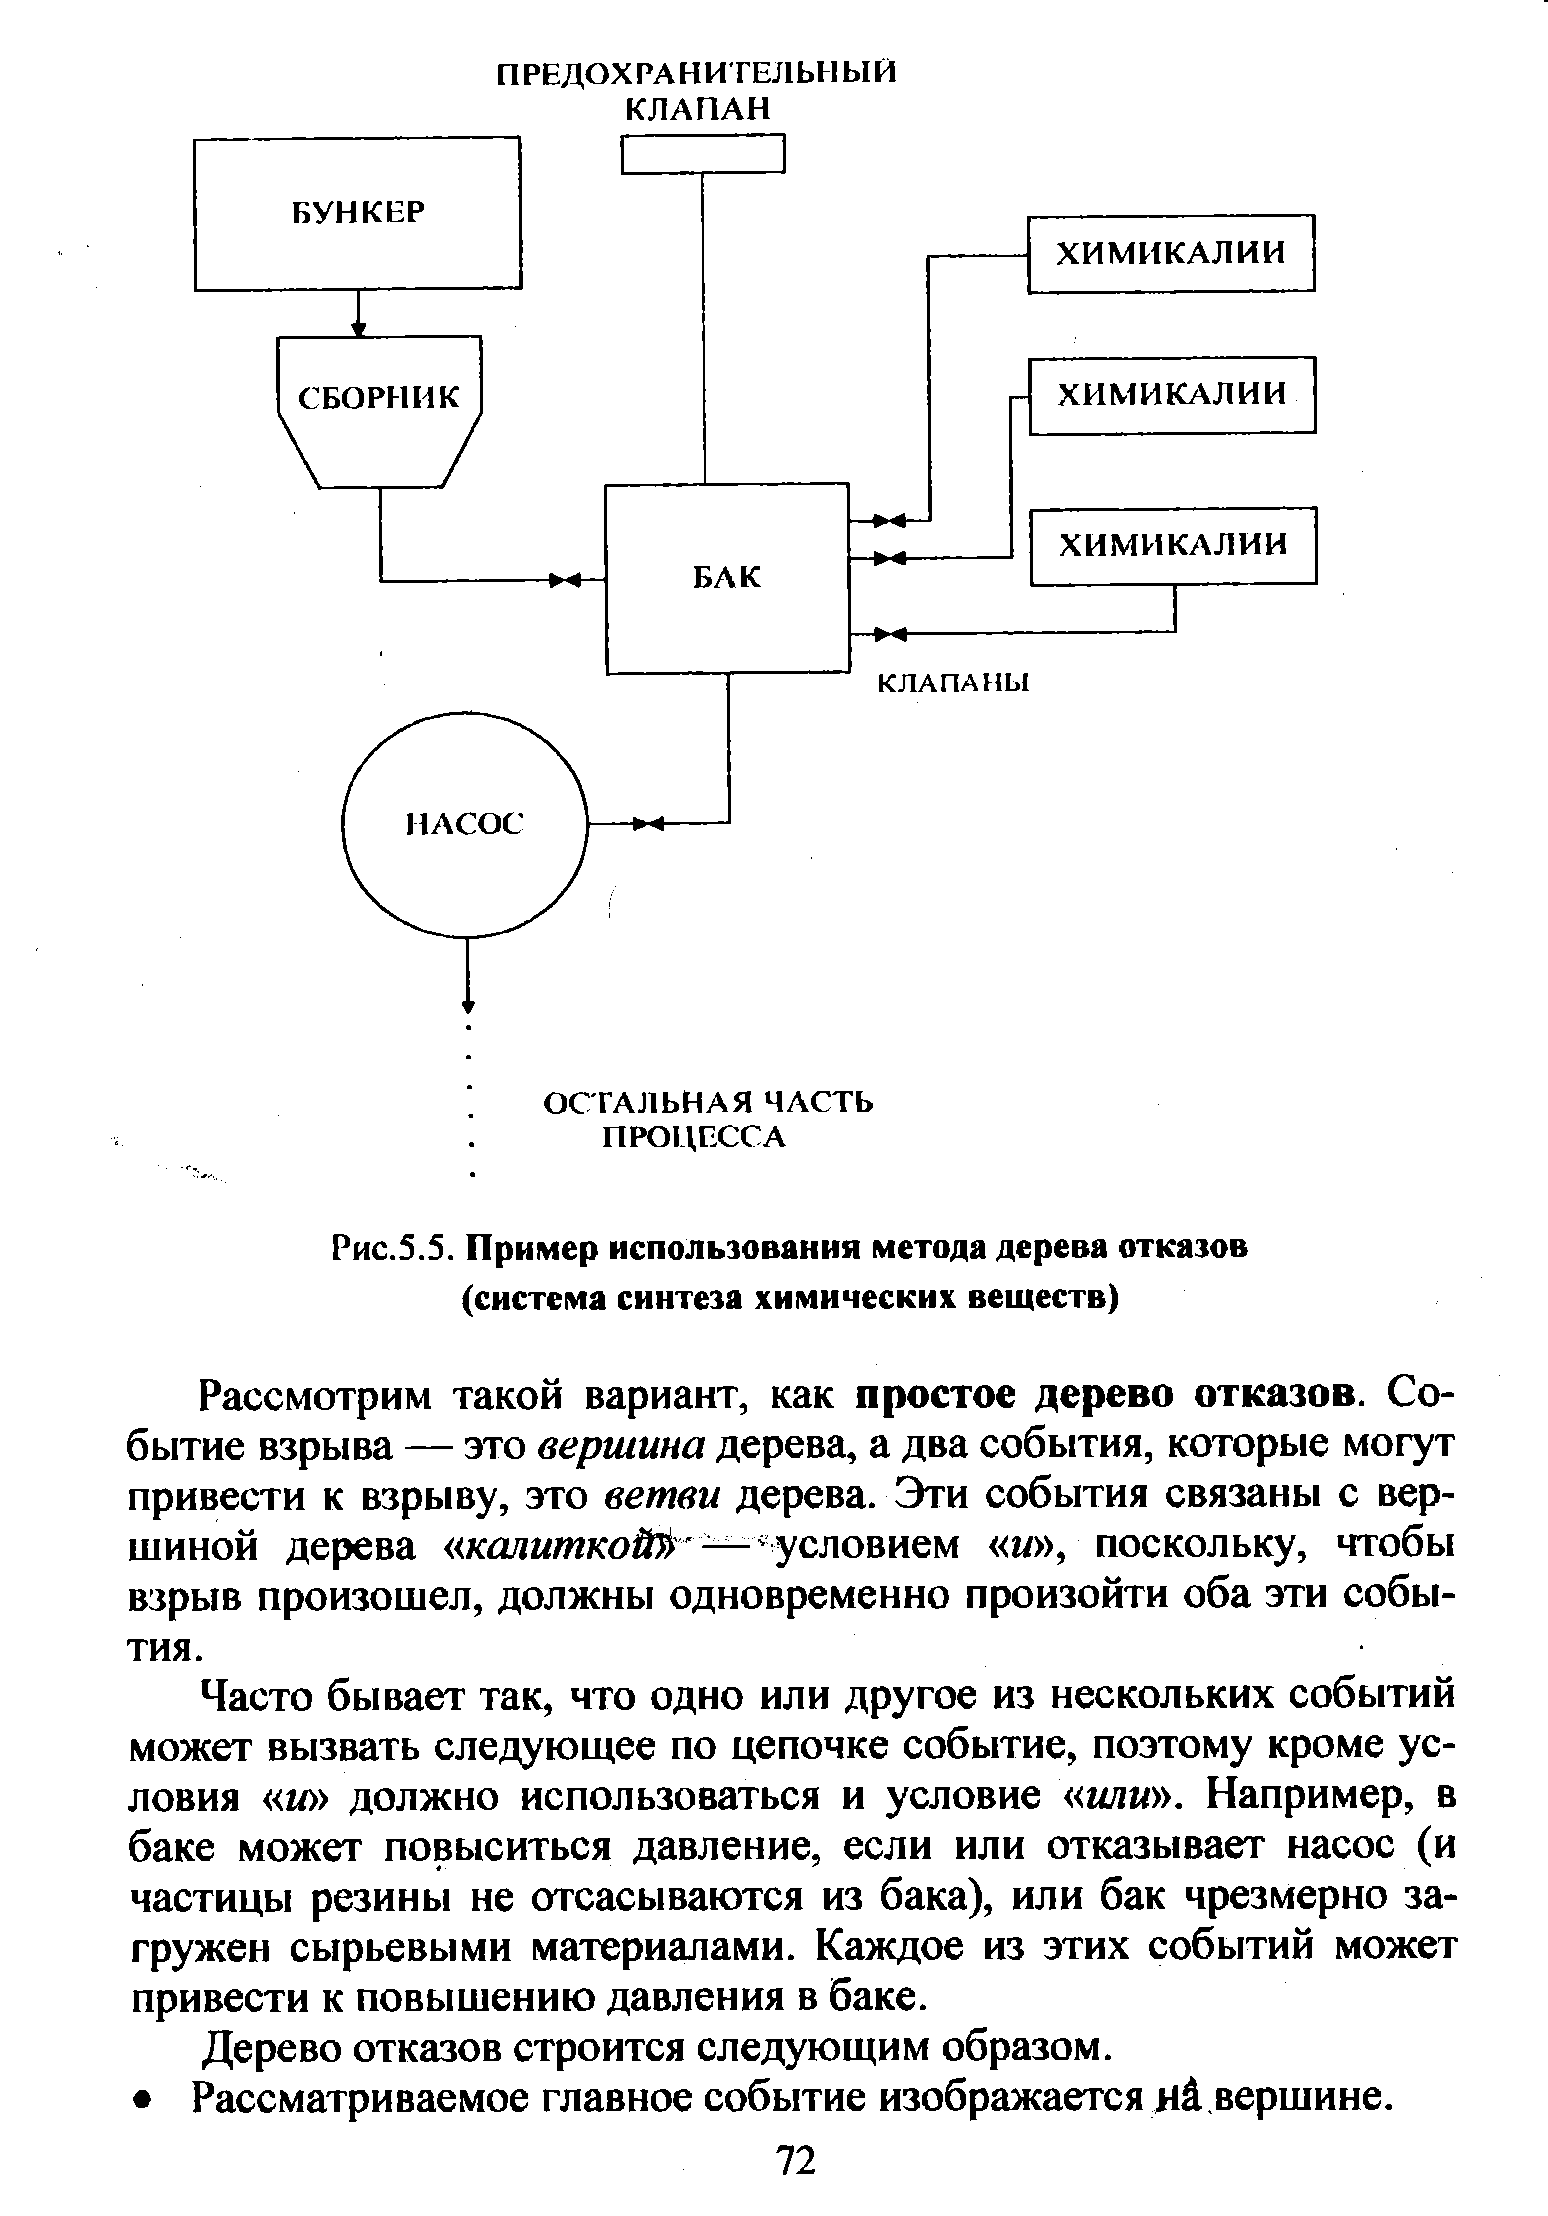 Рис.5.5. Пример использования метода дерева отказов (<a href="/info/21395">система синтеза</a> химических веществ)
